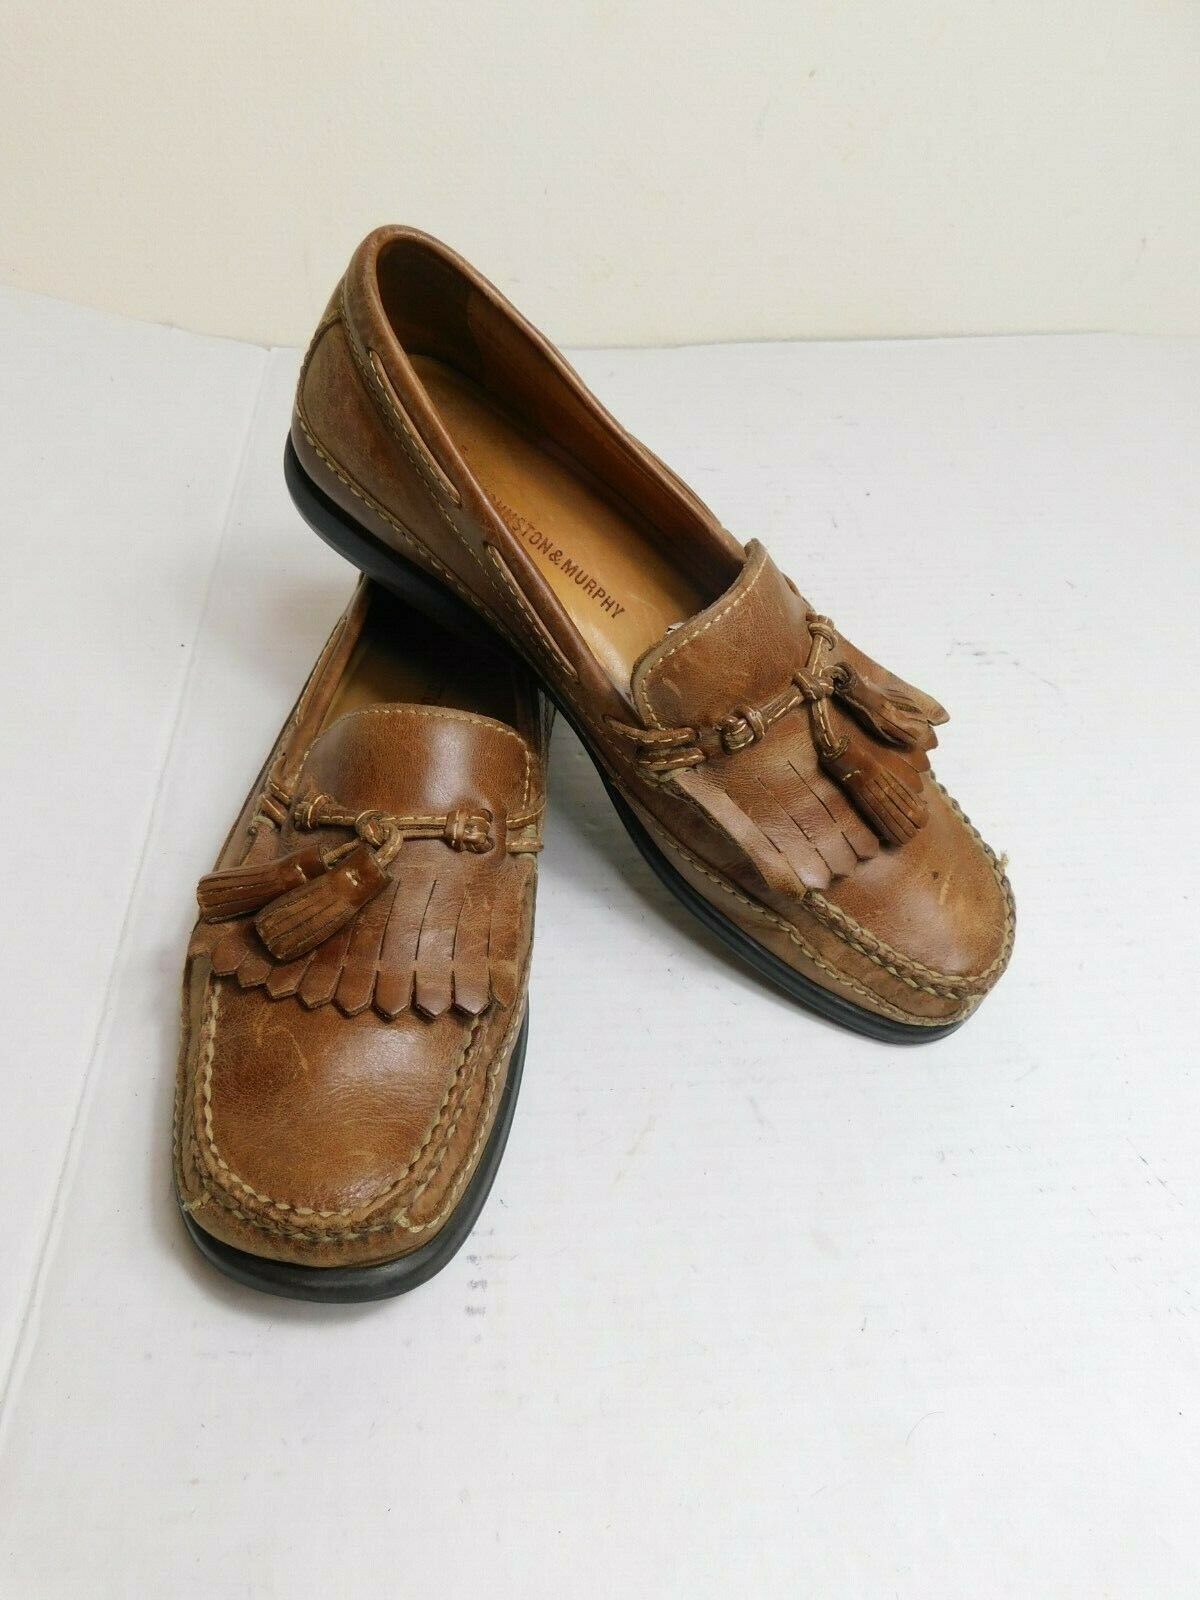 Johnson & Murphy Men's Size 9M Brown Shoes Tassel Kiltie Loafers Leather 208573